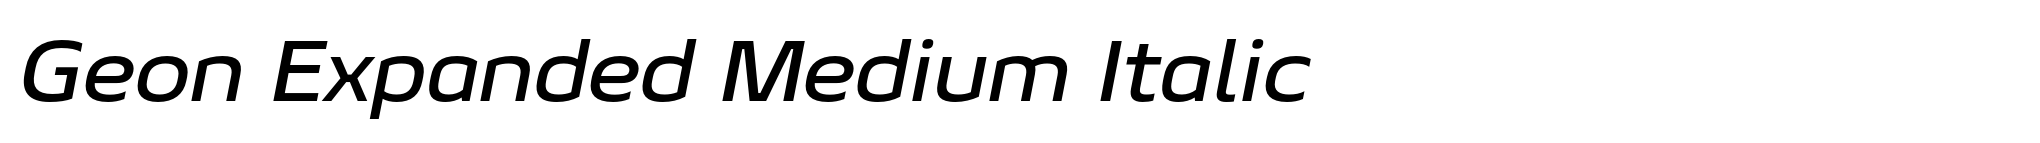 Geon Expanded Medium Italic image